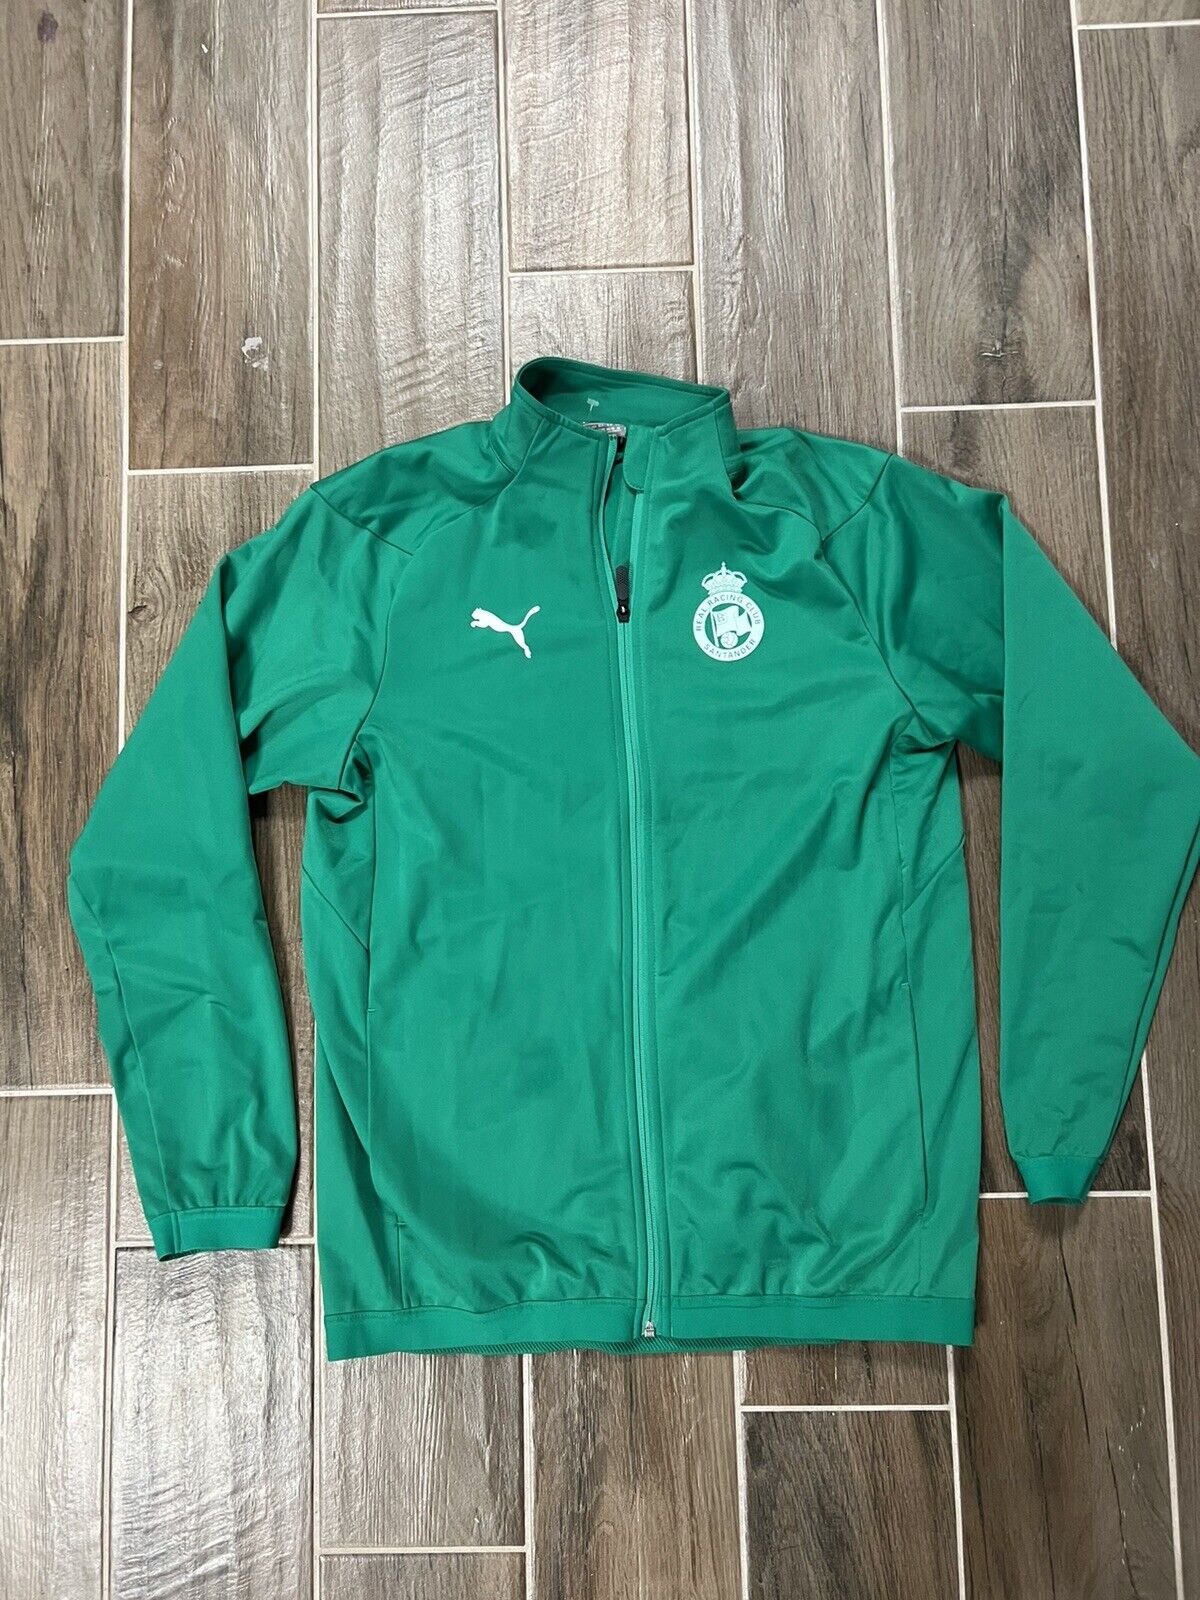 Puma Real Racing Club Santander Green Jacket Zip Up Soccer | eBay